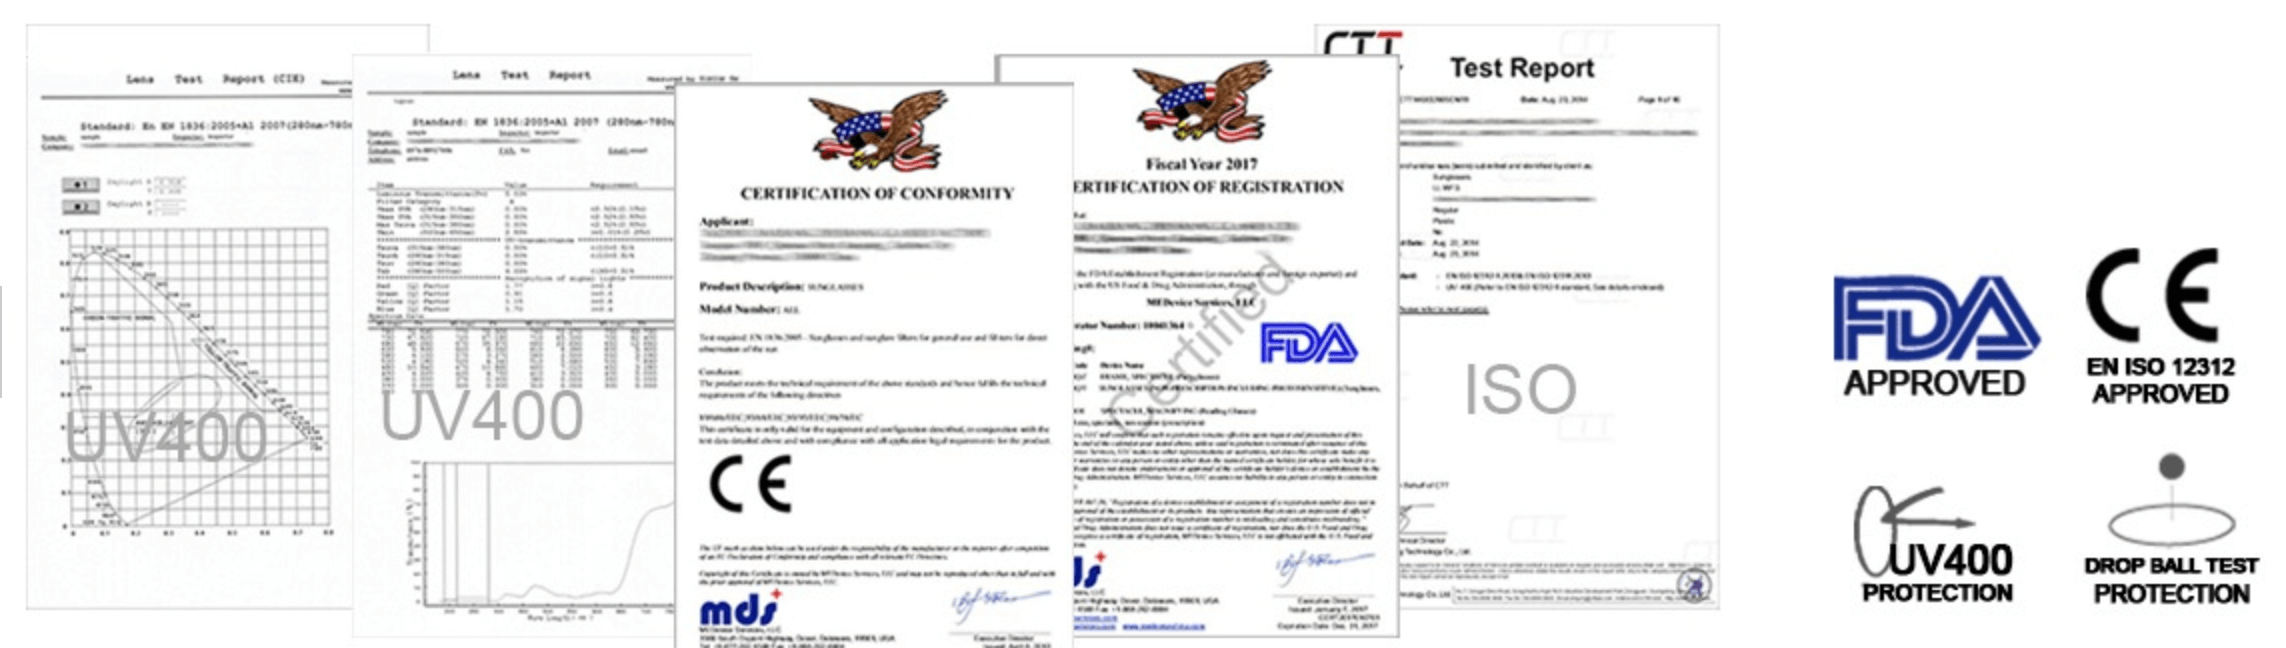 CE FDA UV400 certificates_Wholesale Ski Goggles - Wholesale Snow Goggles from China Ski Goggle Manufacturers